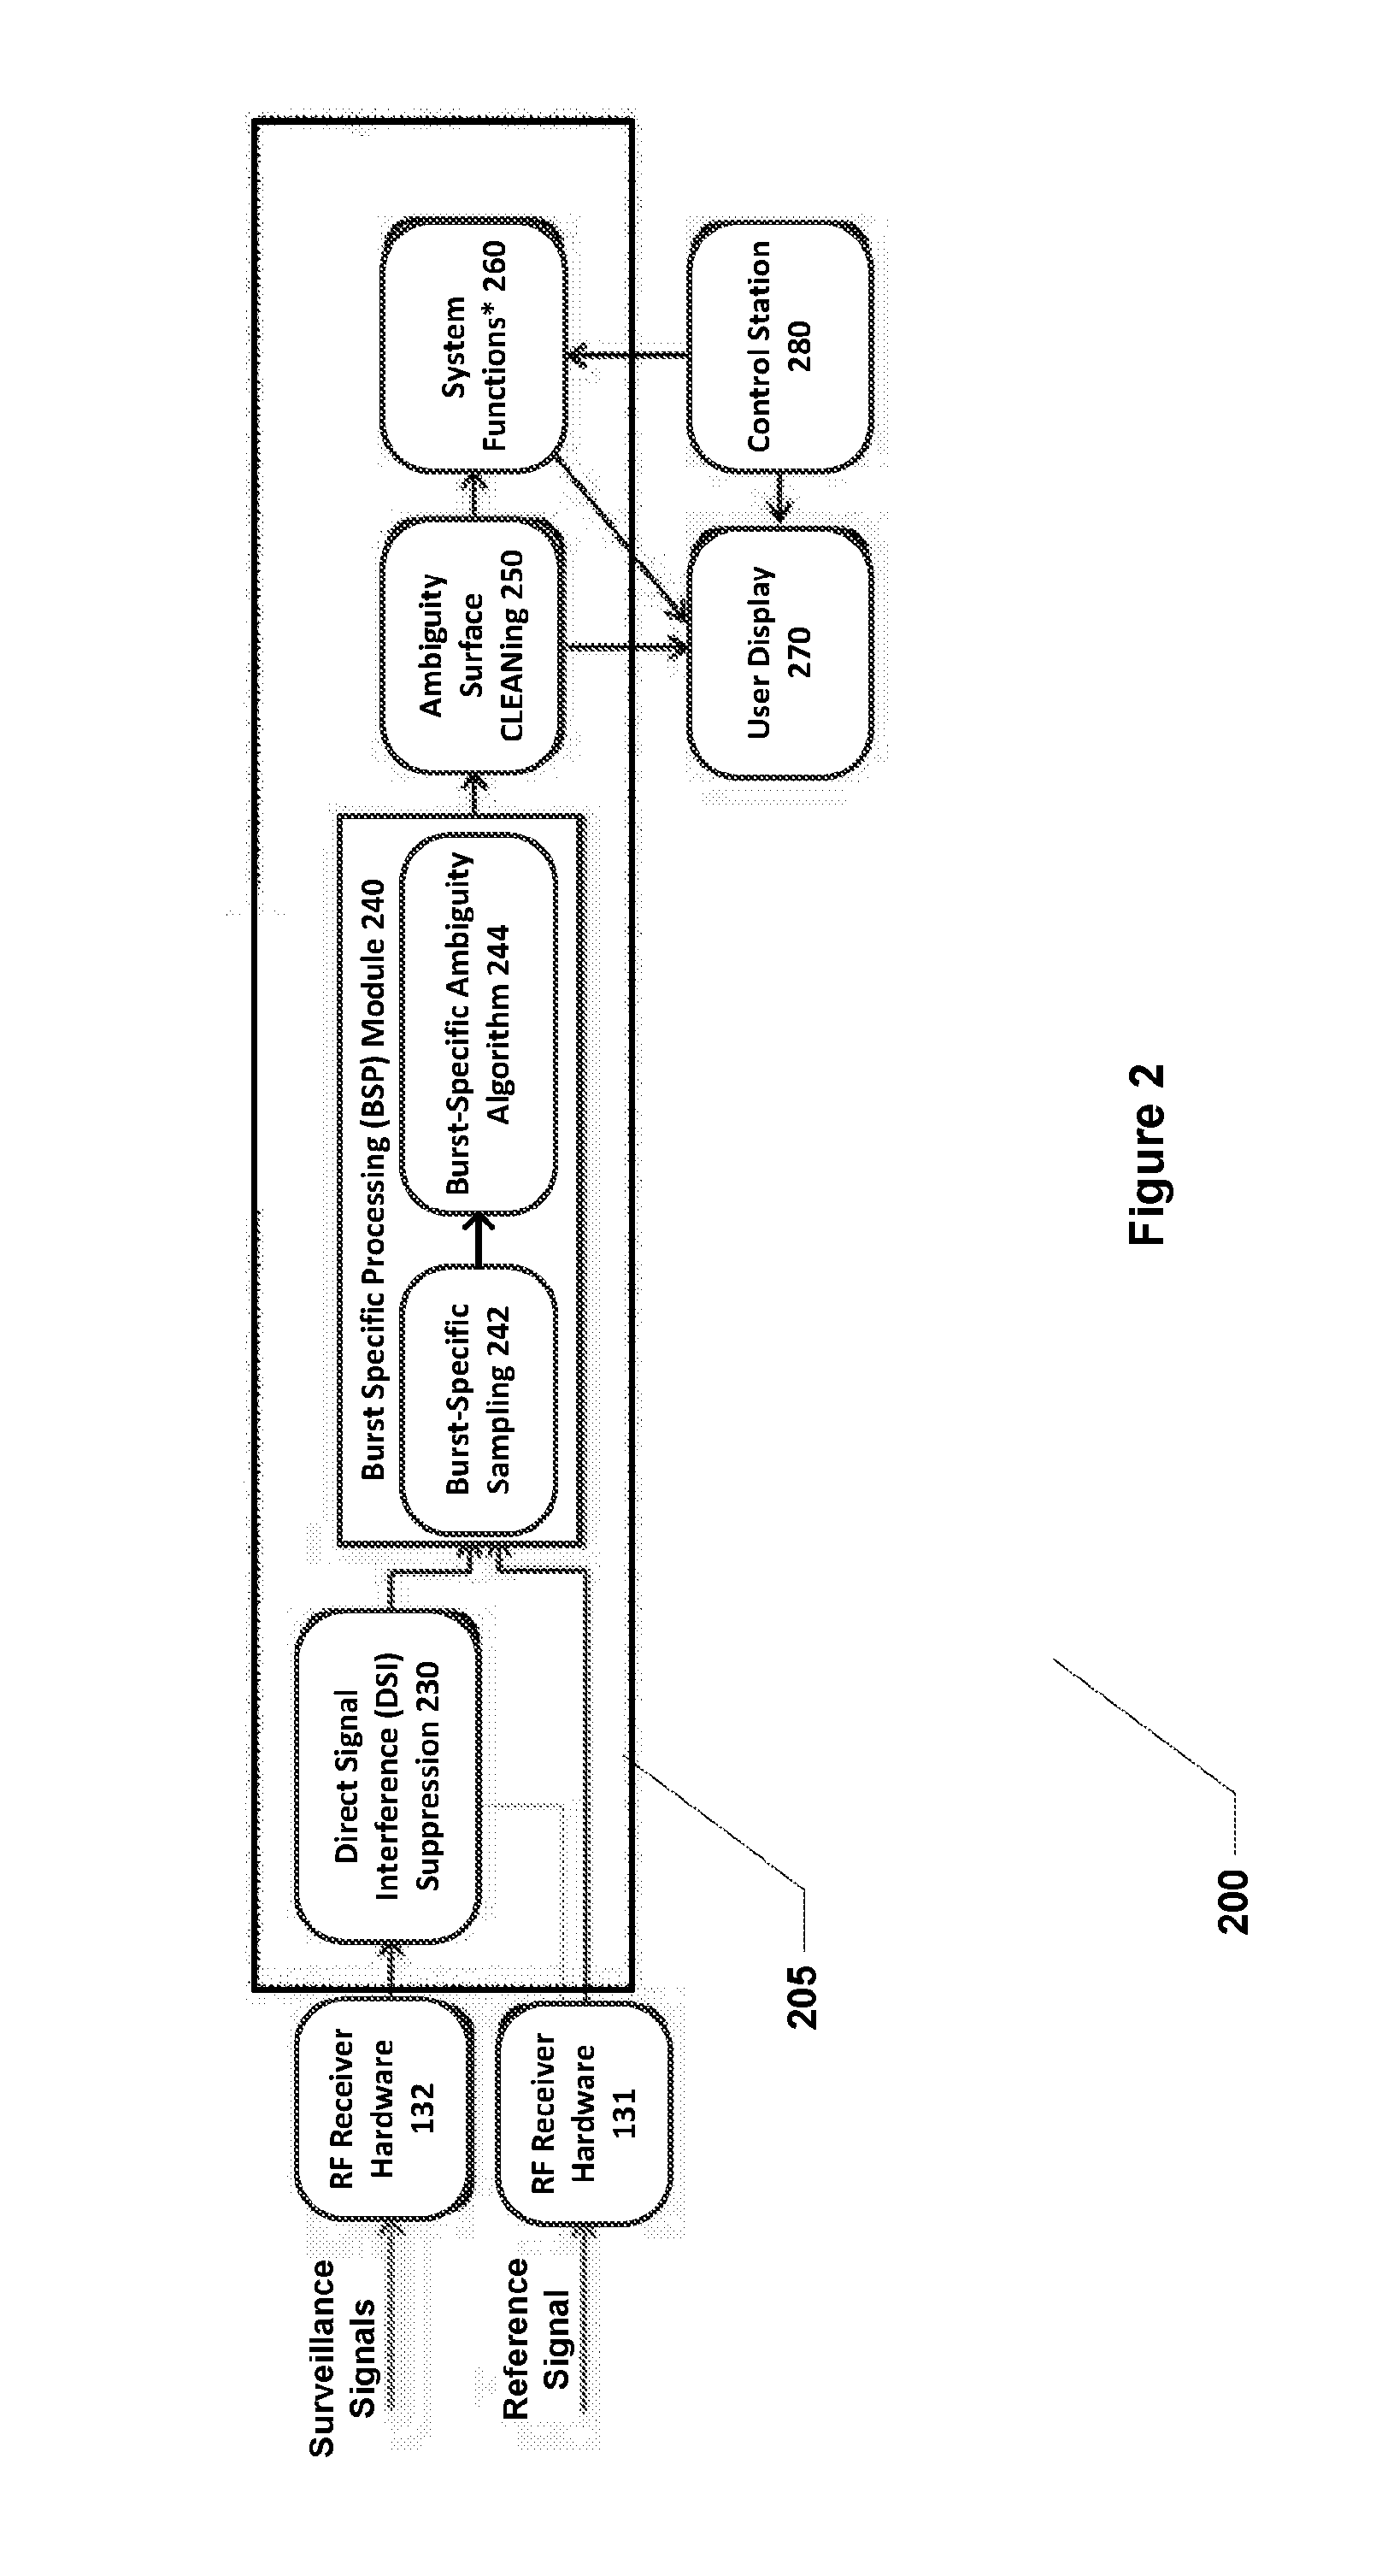 Apparatus and method for performing passive sensing